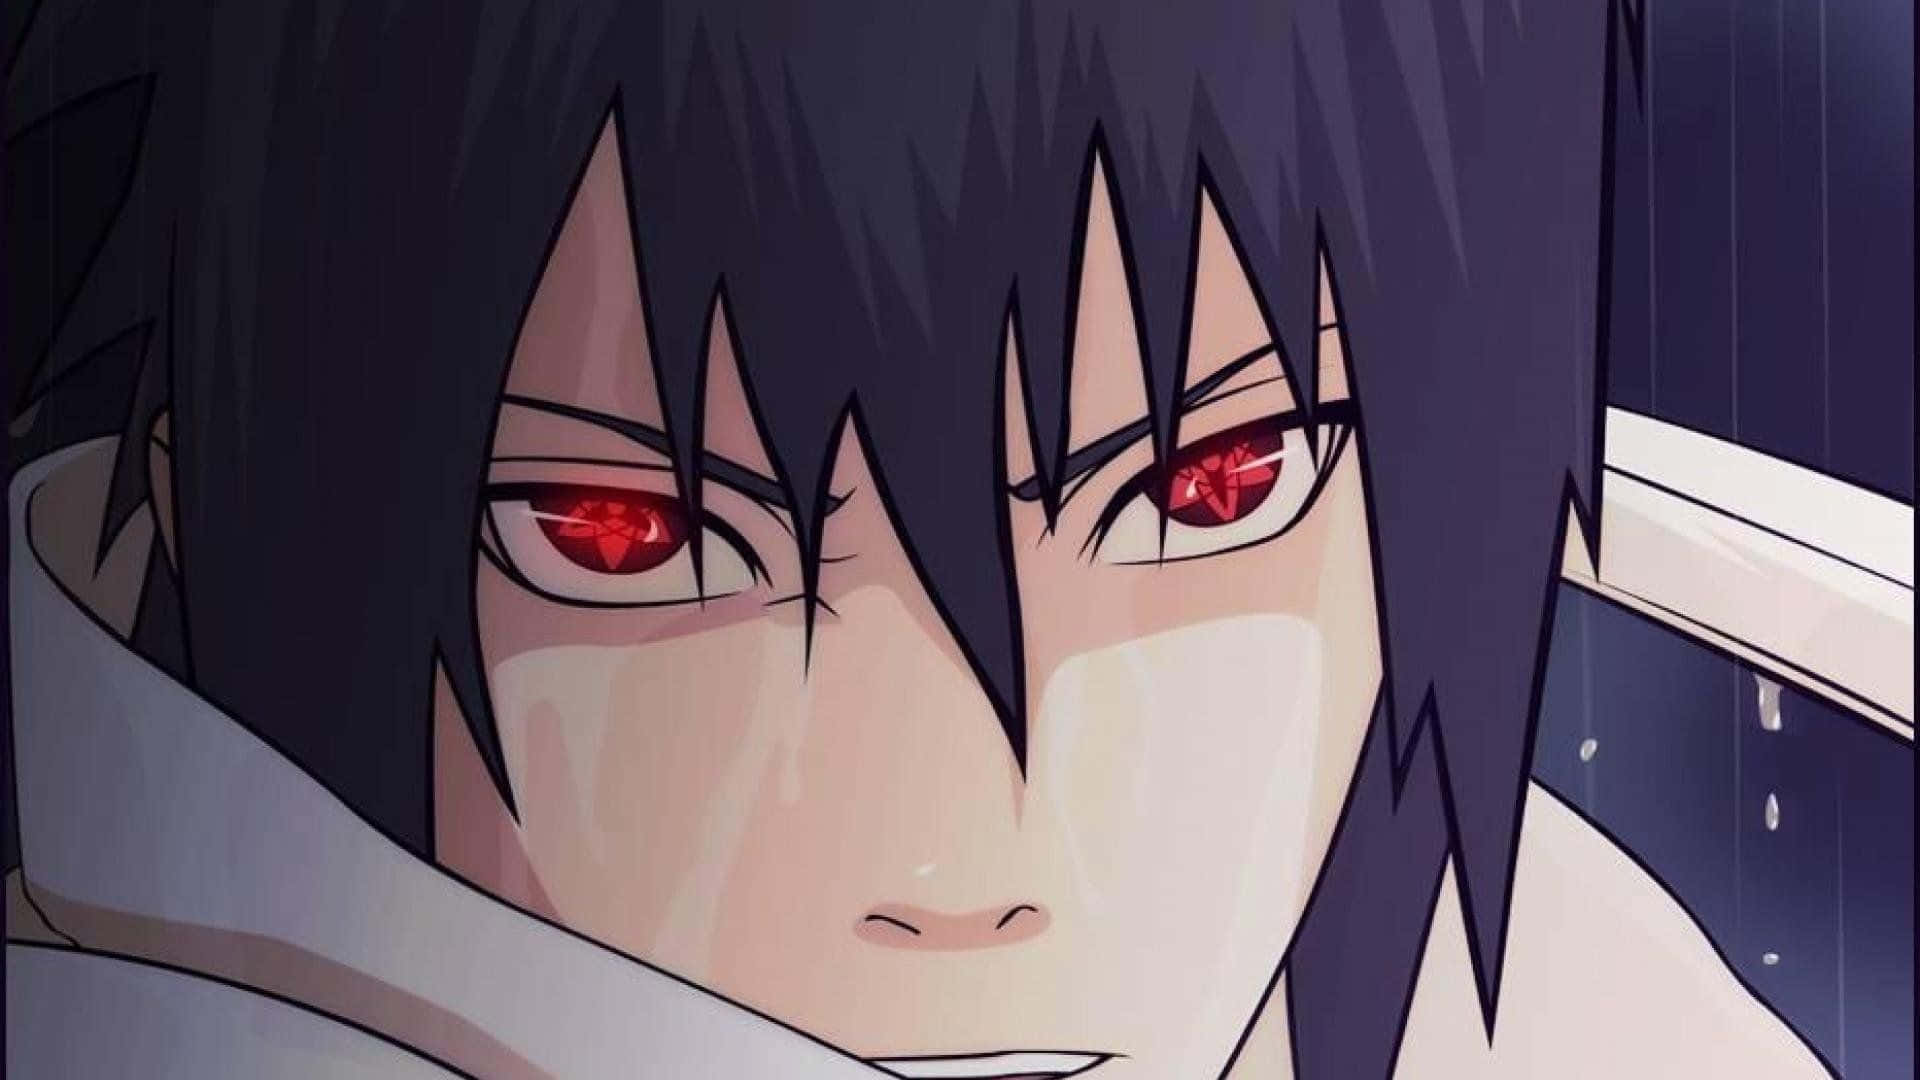 Impassive yet Intense – Sasuke Face Wallpaper